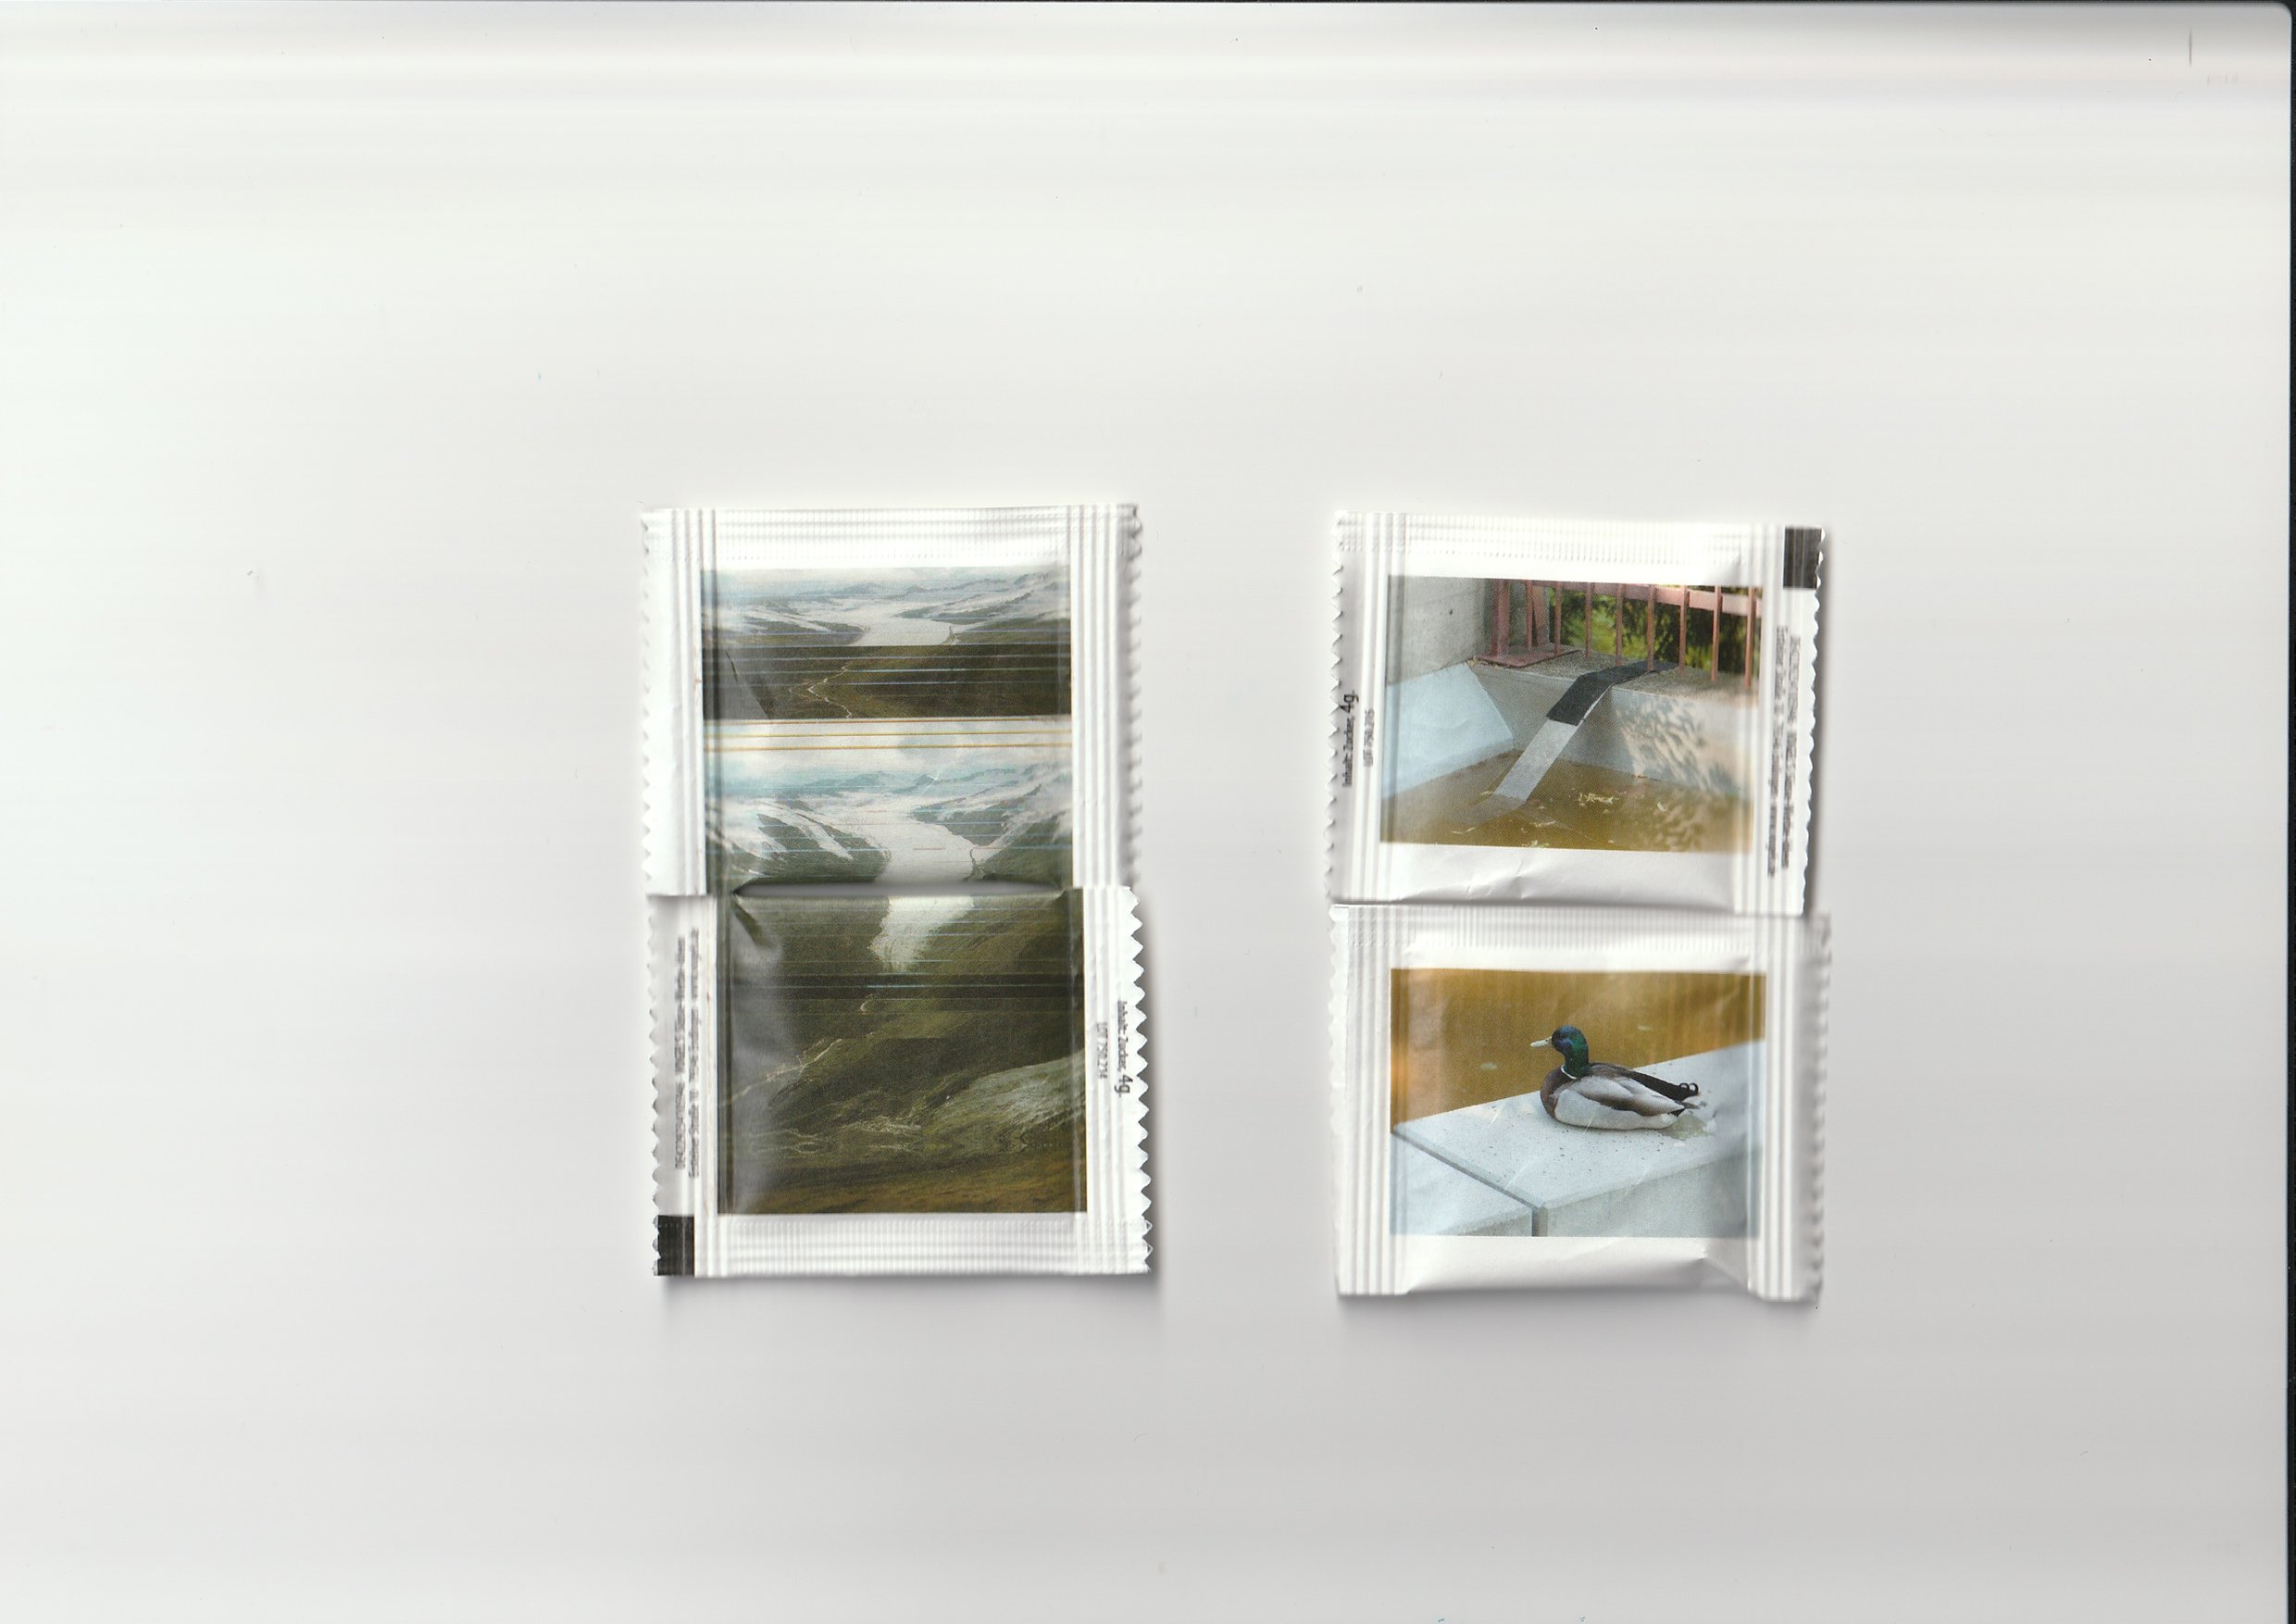   fig17 (scan) (left) Hiroshi Takizawa, Avalanche, 2023, Print on sugar packets, edition of 500, 6,4 x 5 cm (right) Bianca Pedrina, Coexisting, 2023, Print on sugar packets, edition of 500, 6,4 x 5 cm  